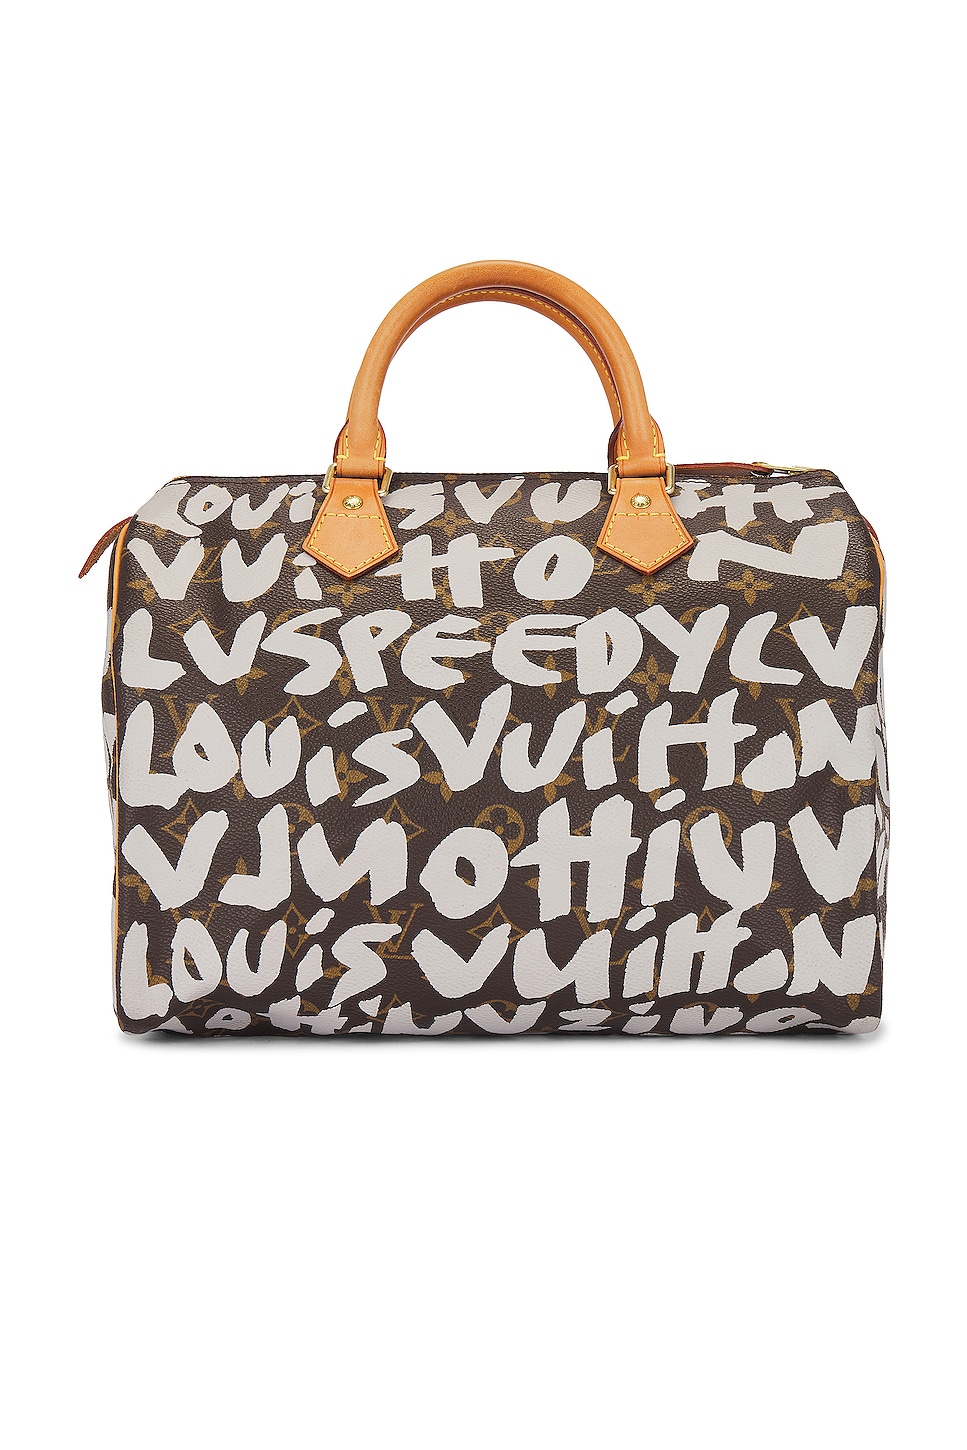 FWRD Renew Louis Vuitton Pillow Speedy Bandouliere 25 Bag in Navy